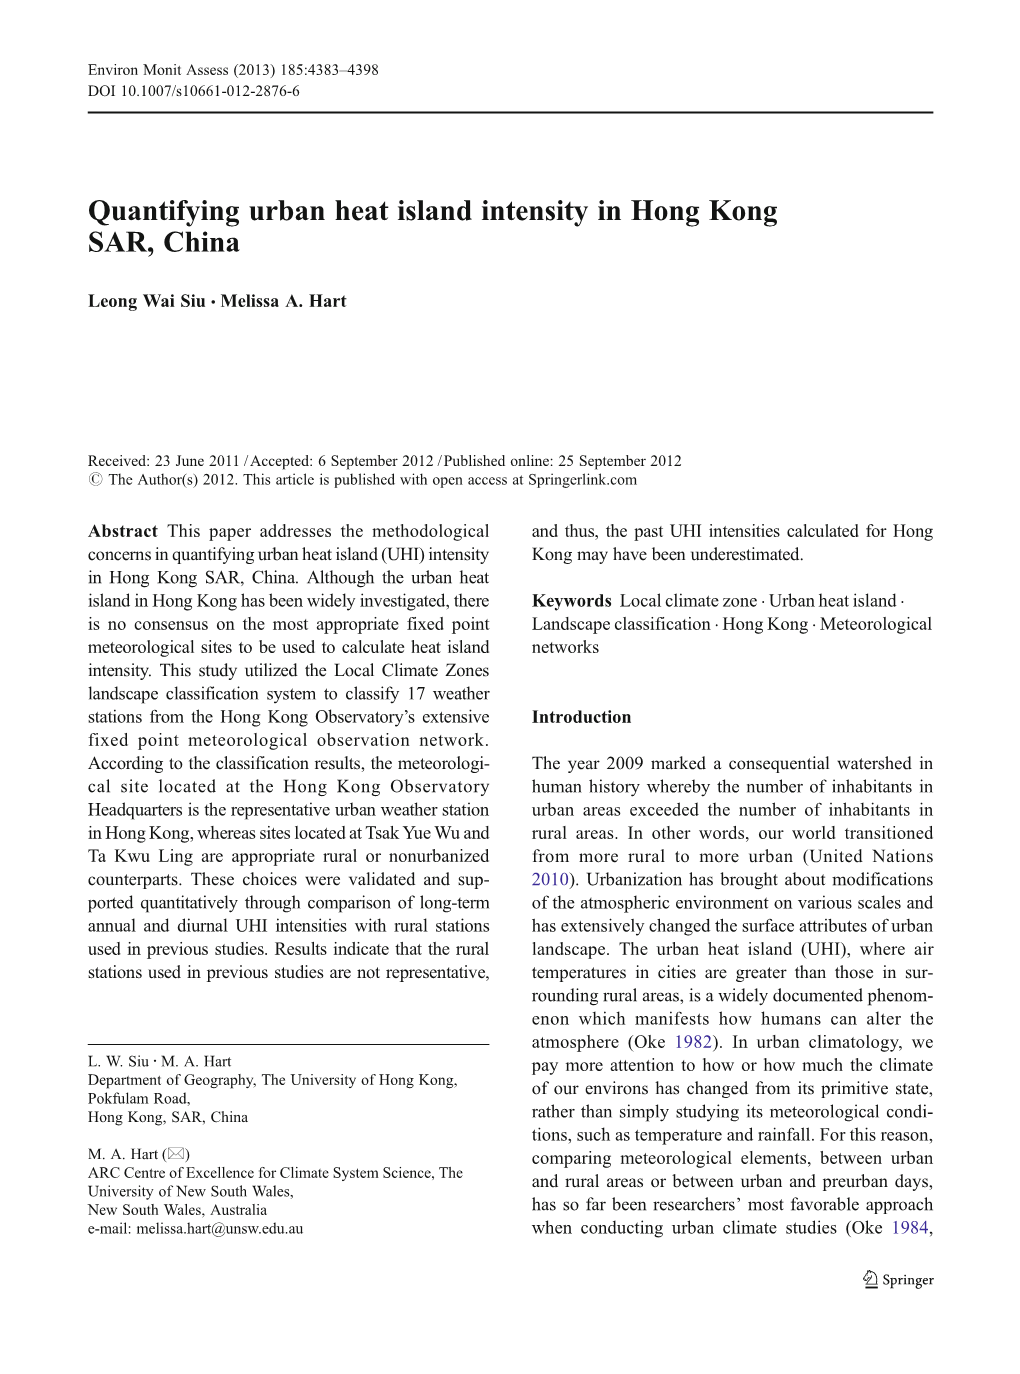 Quantifying Urban Heat Island Intensity in Hong Kong SAR, China